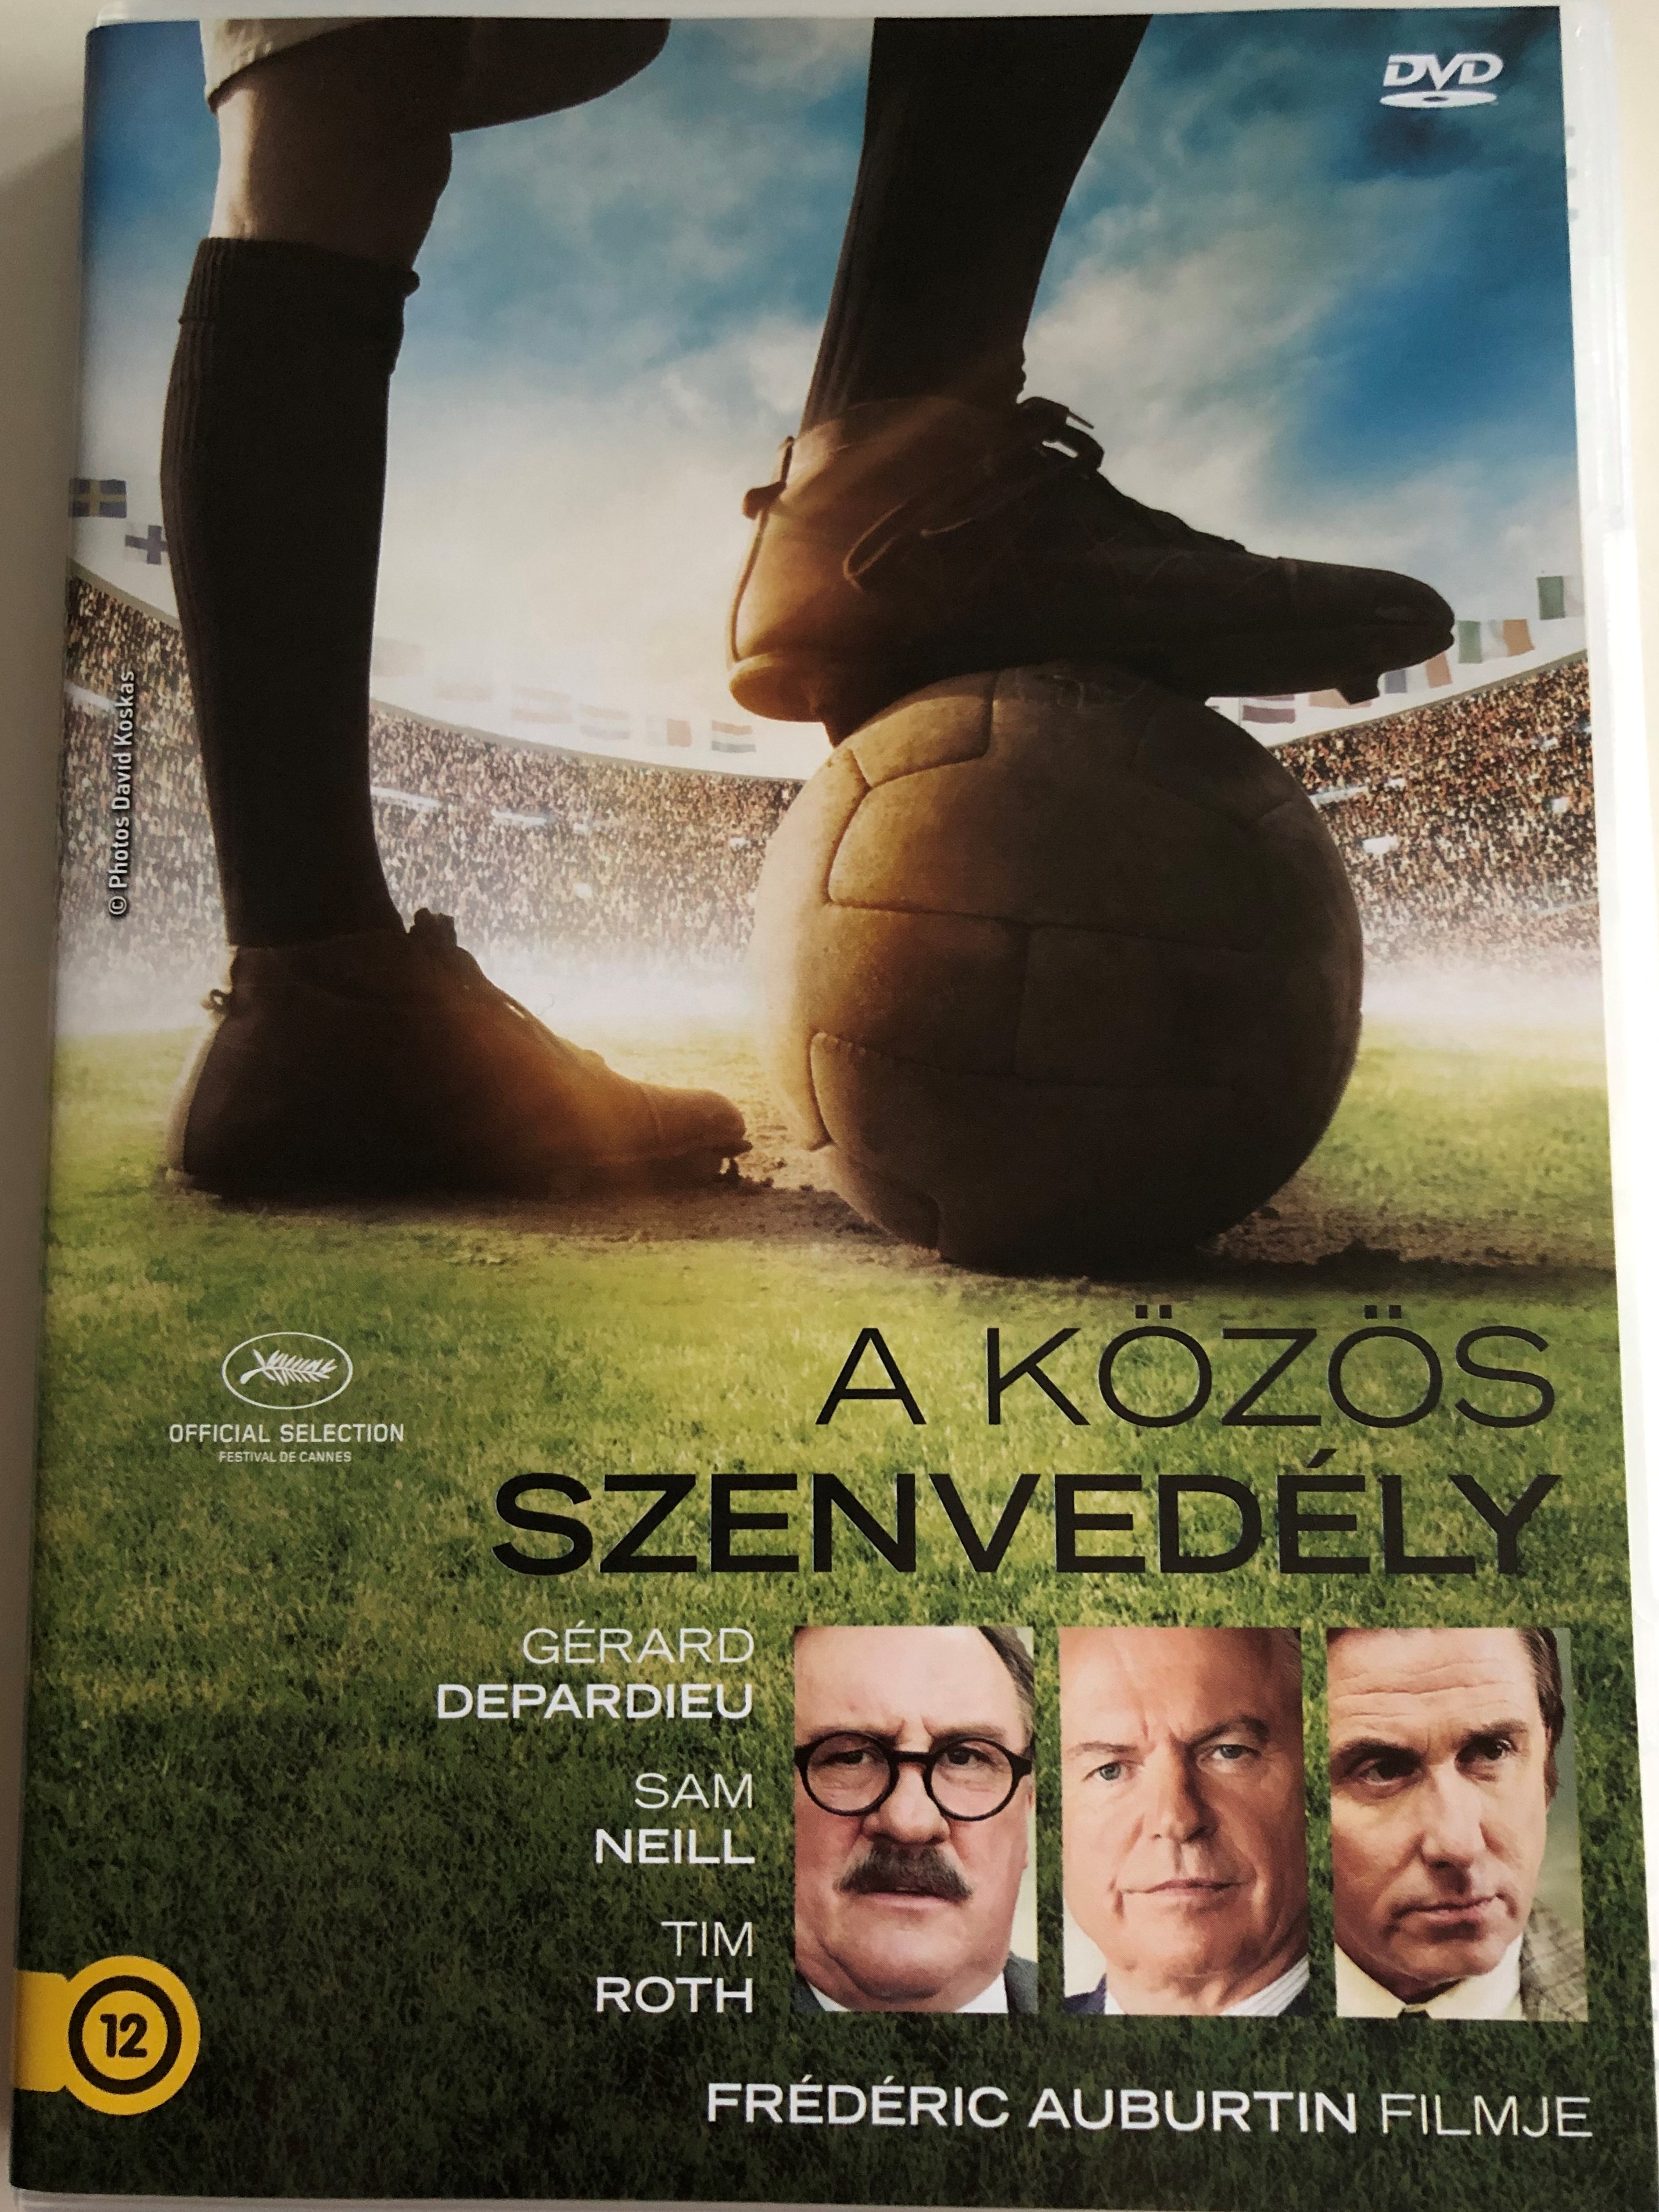 united-passions-dvd-2014-k-z-s-szenved-ly-directed-by-fr-d-ric-auburtin-1-.jpg